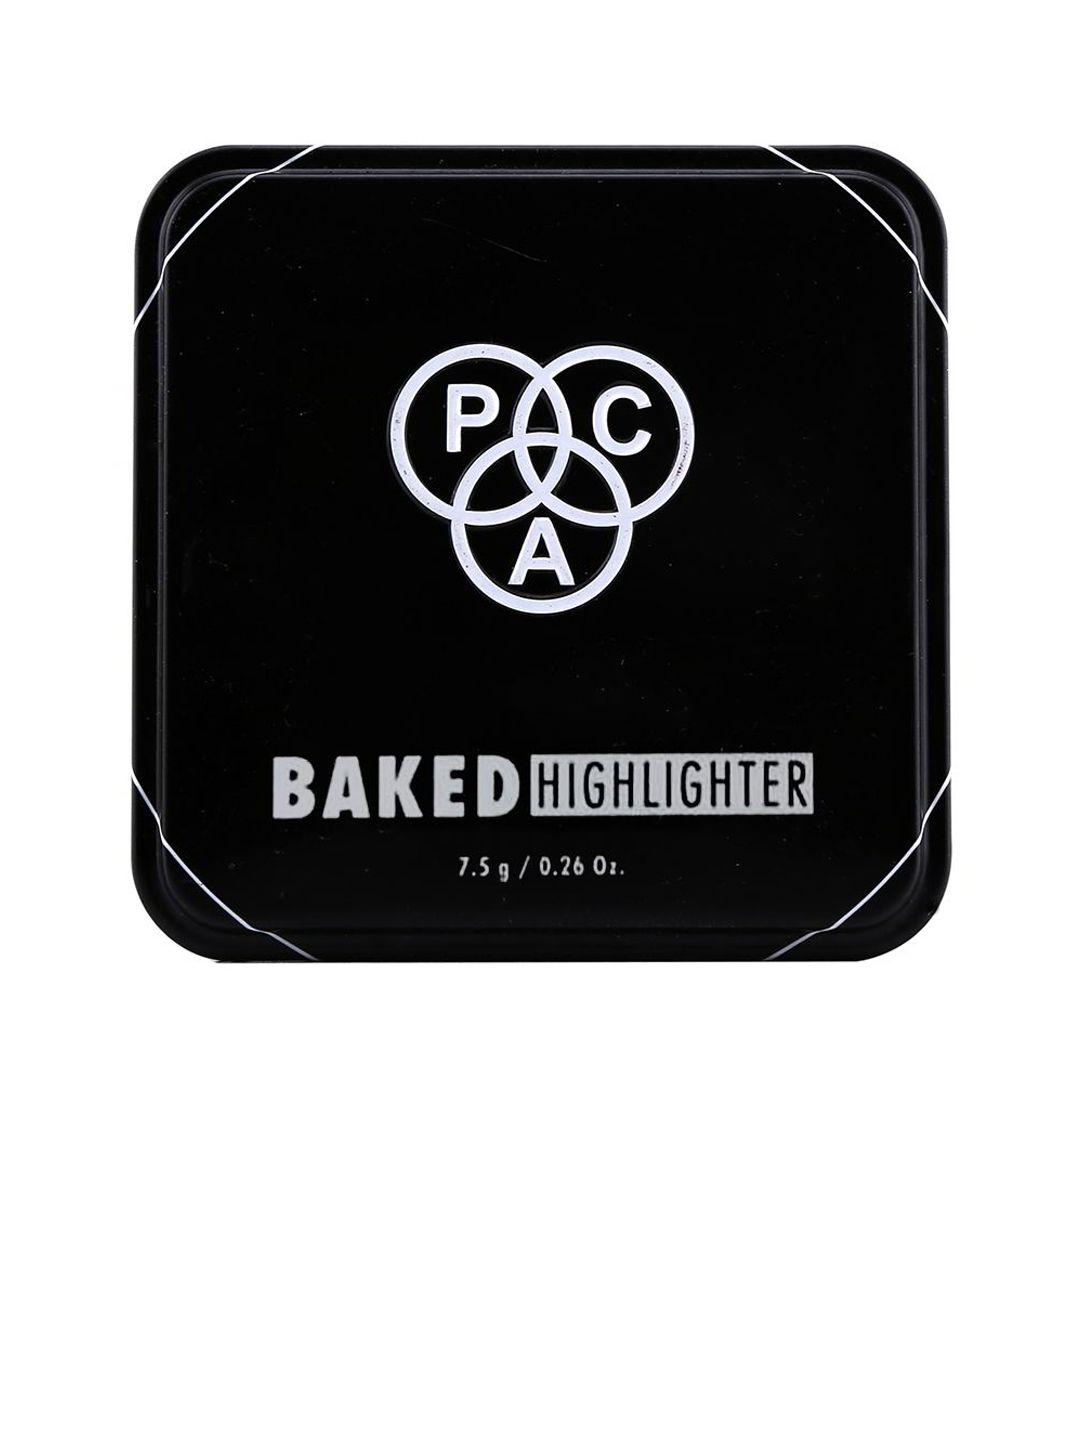 pac beige serving glamour baked highlighter 7.5 gms